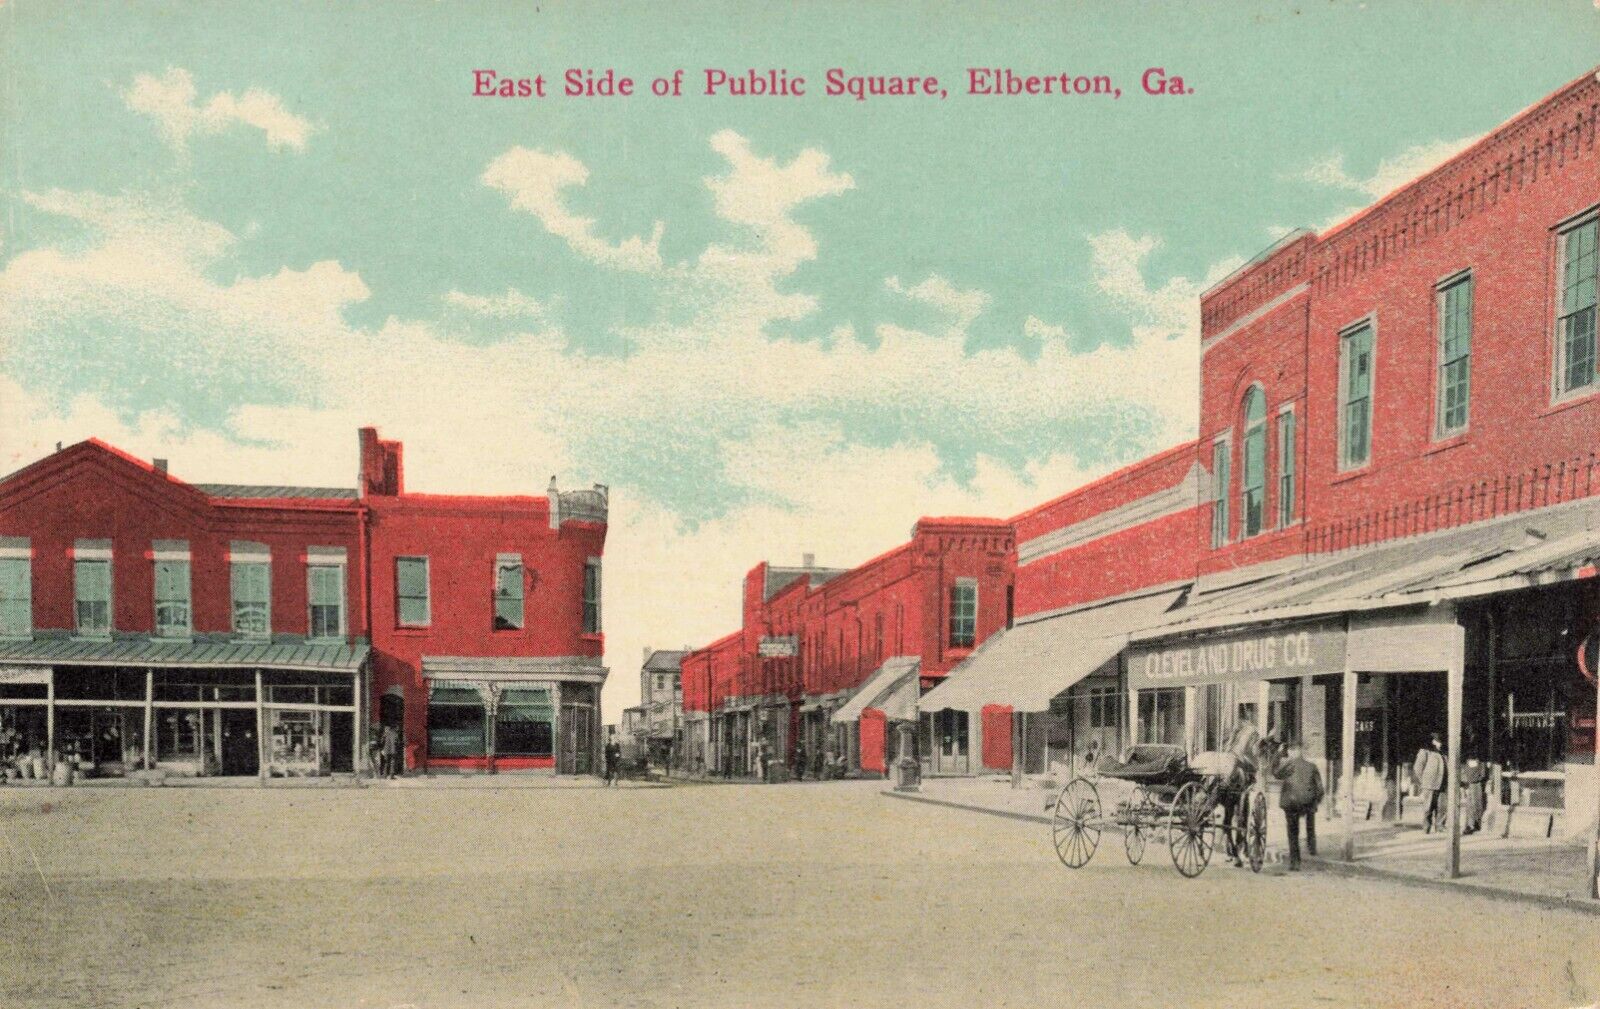 GA-Elberton, Georgia-East Side of Public Square-Cleveland Drug Co. c1910